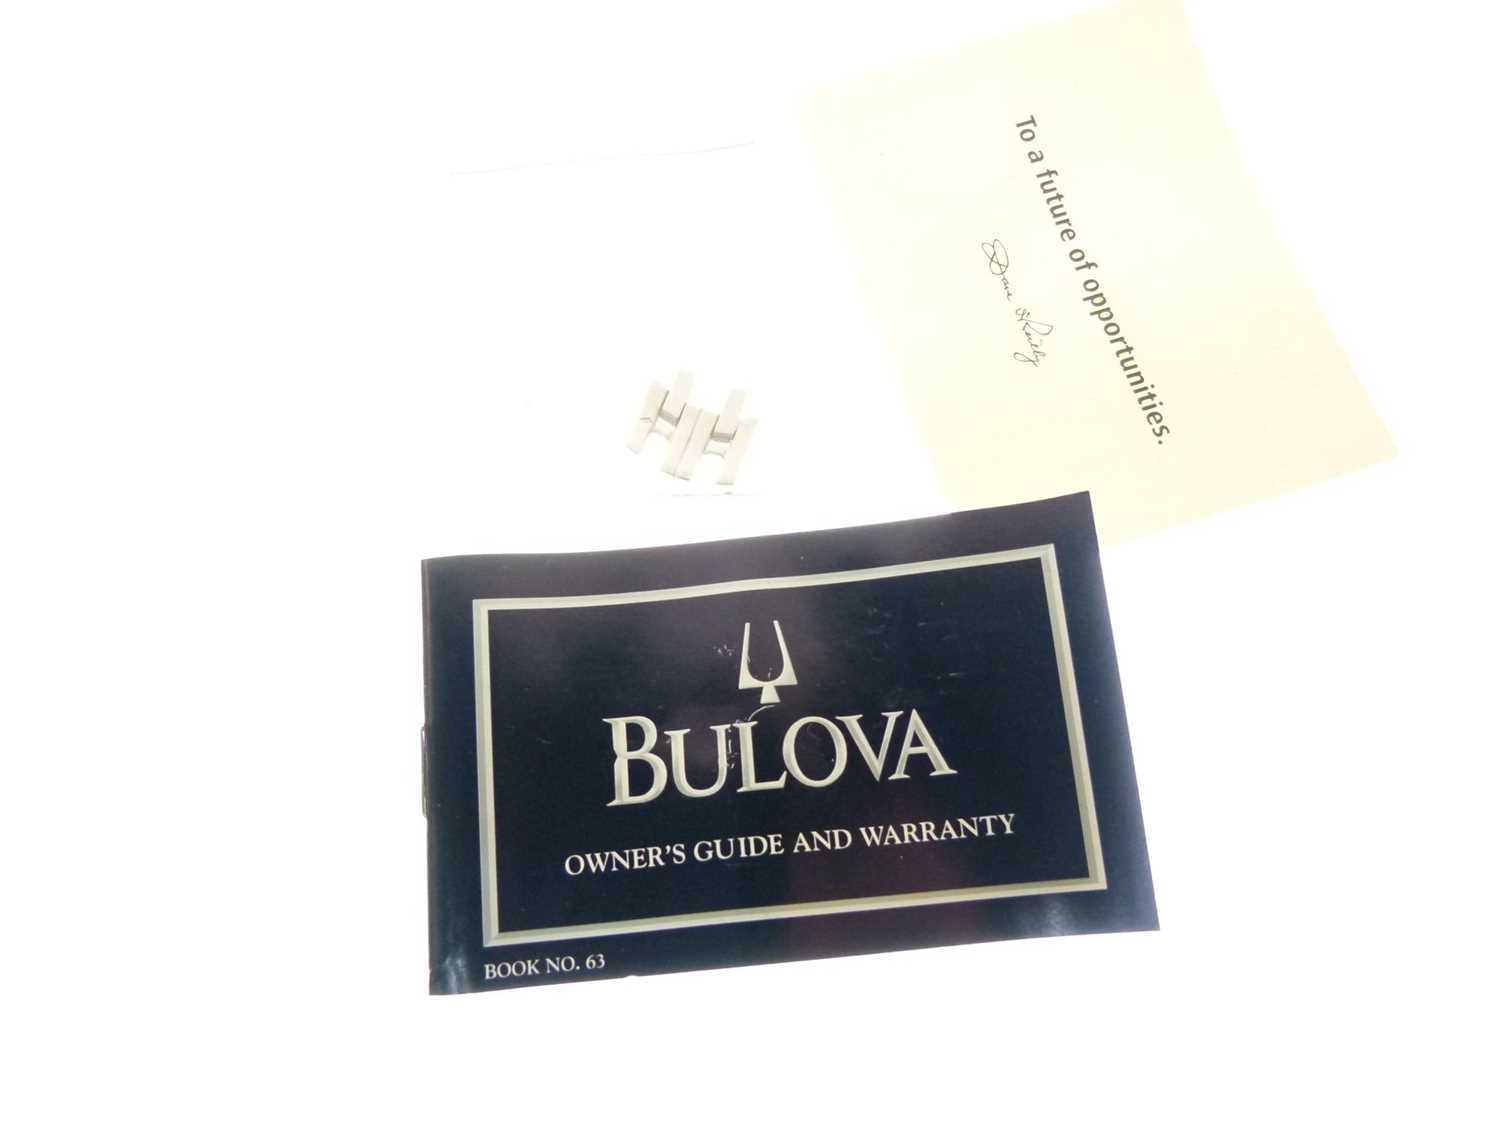 Bulova - Two gentleman's Marine Star quartz wristwatches - Image 7 of 8